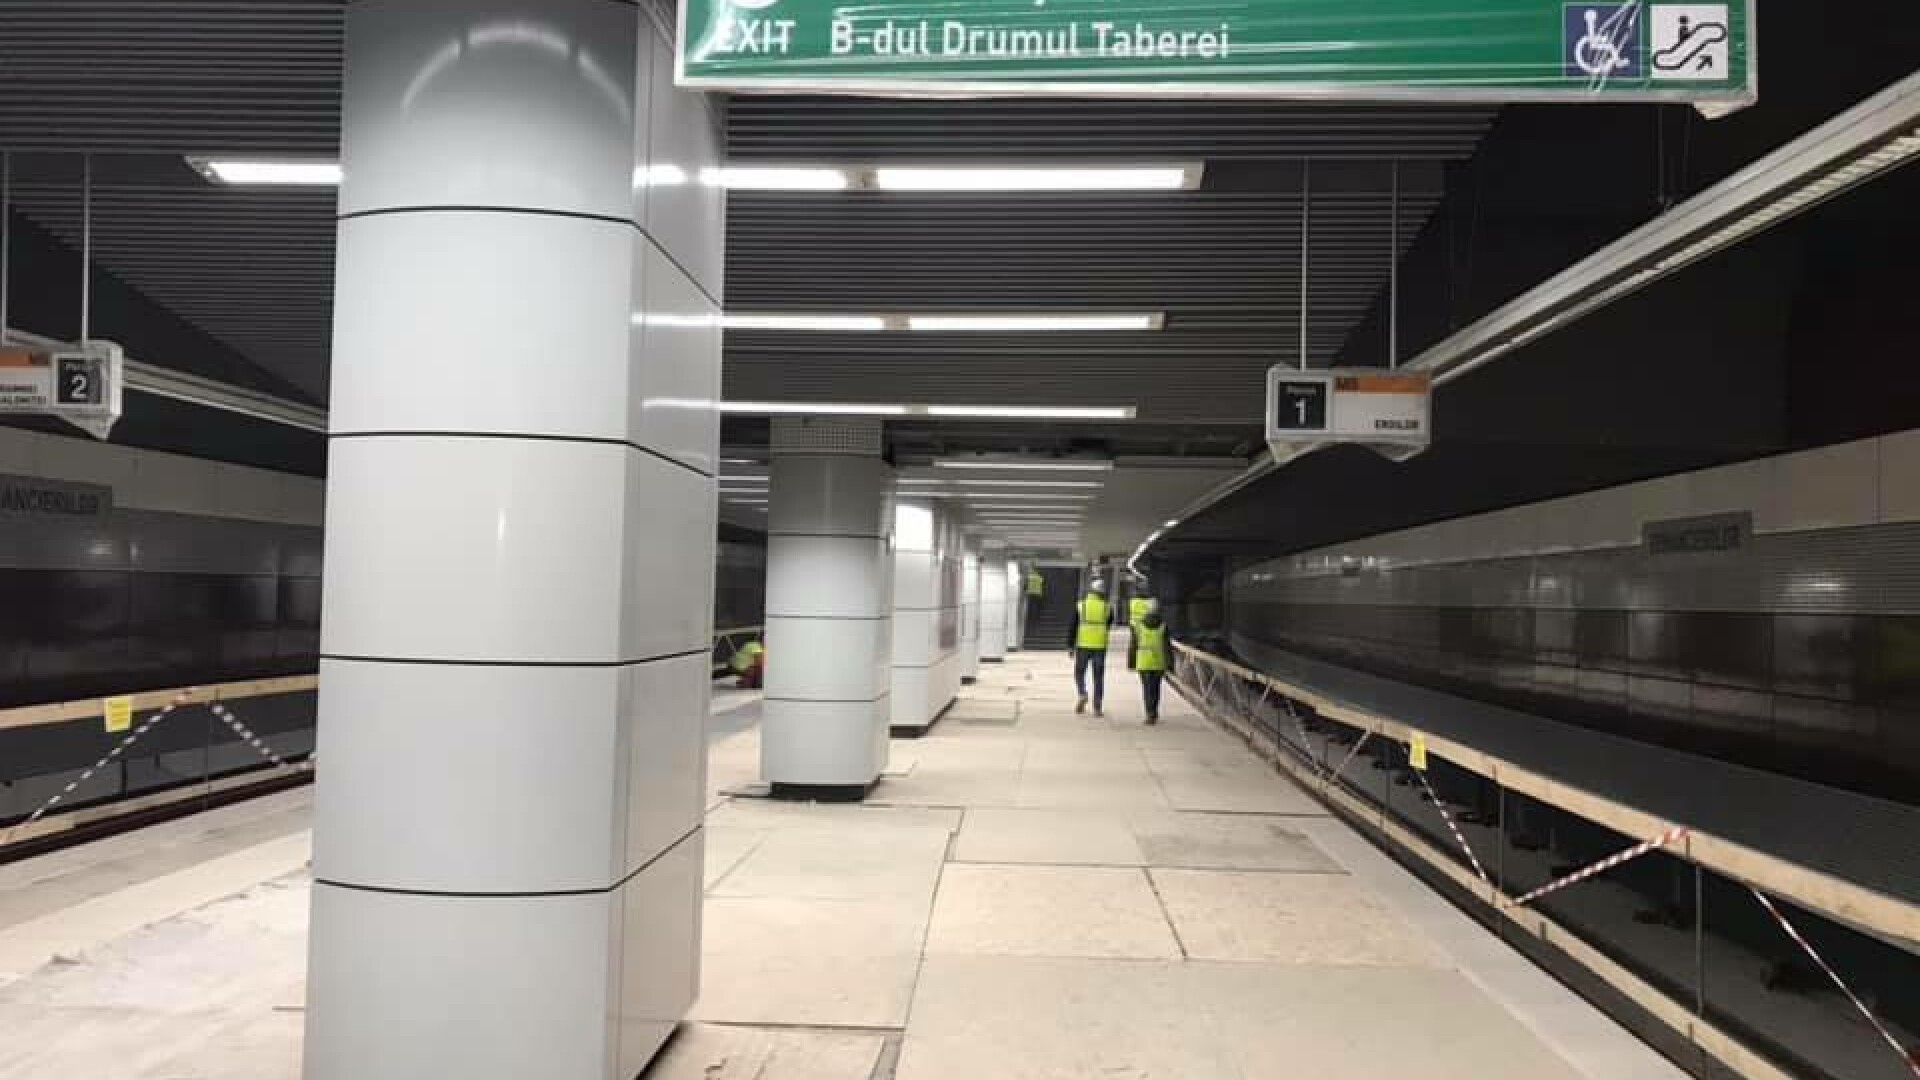 metrou Drumul Taberei, februarie 2019 - 1